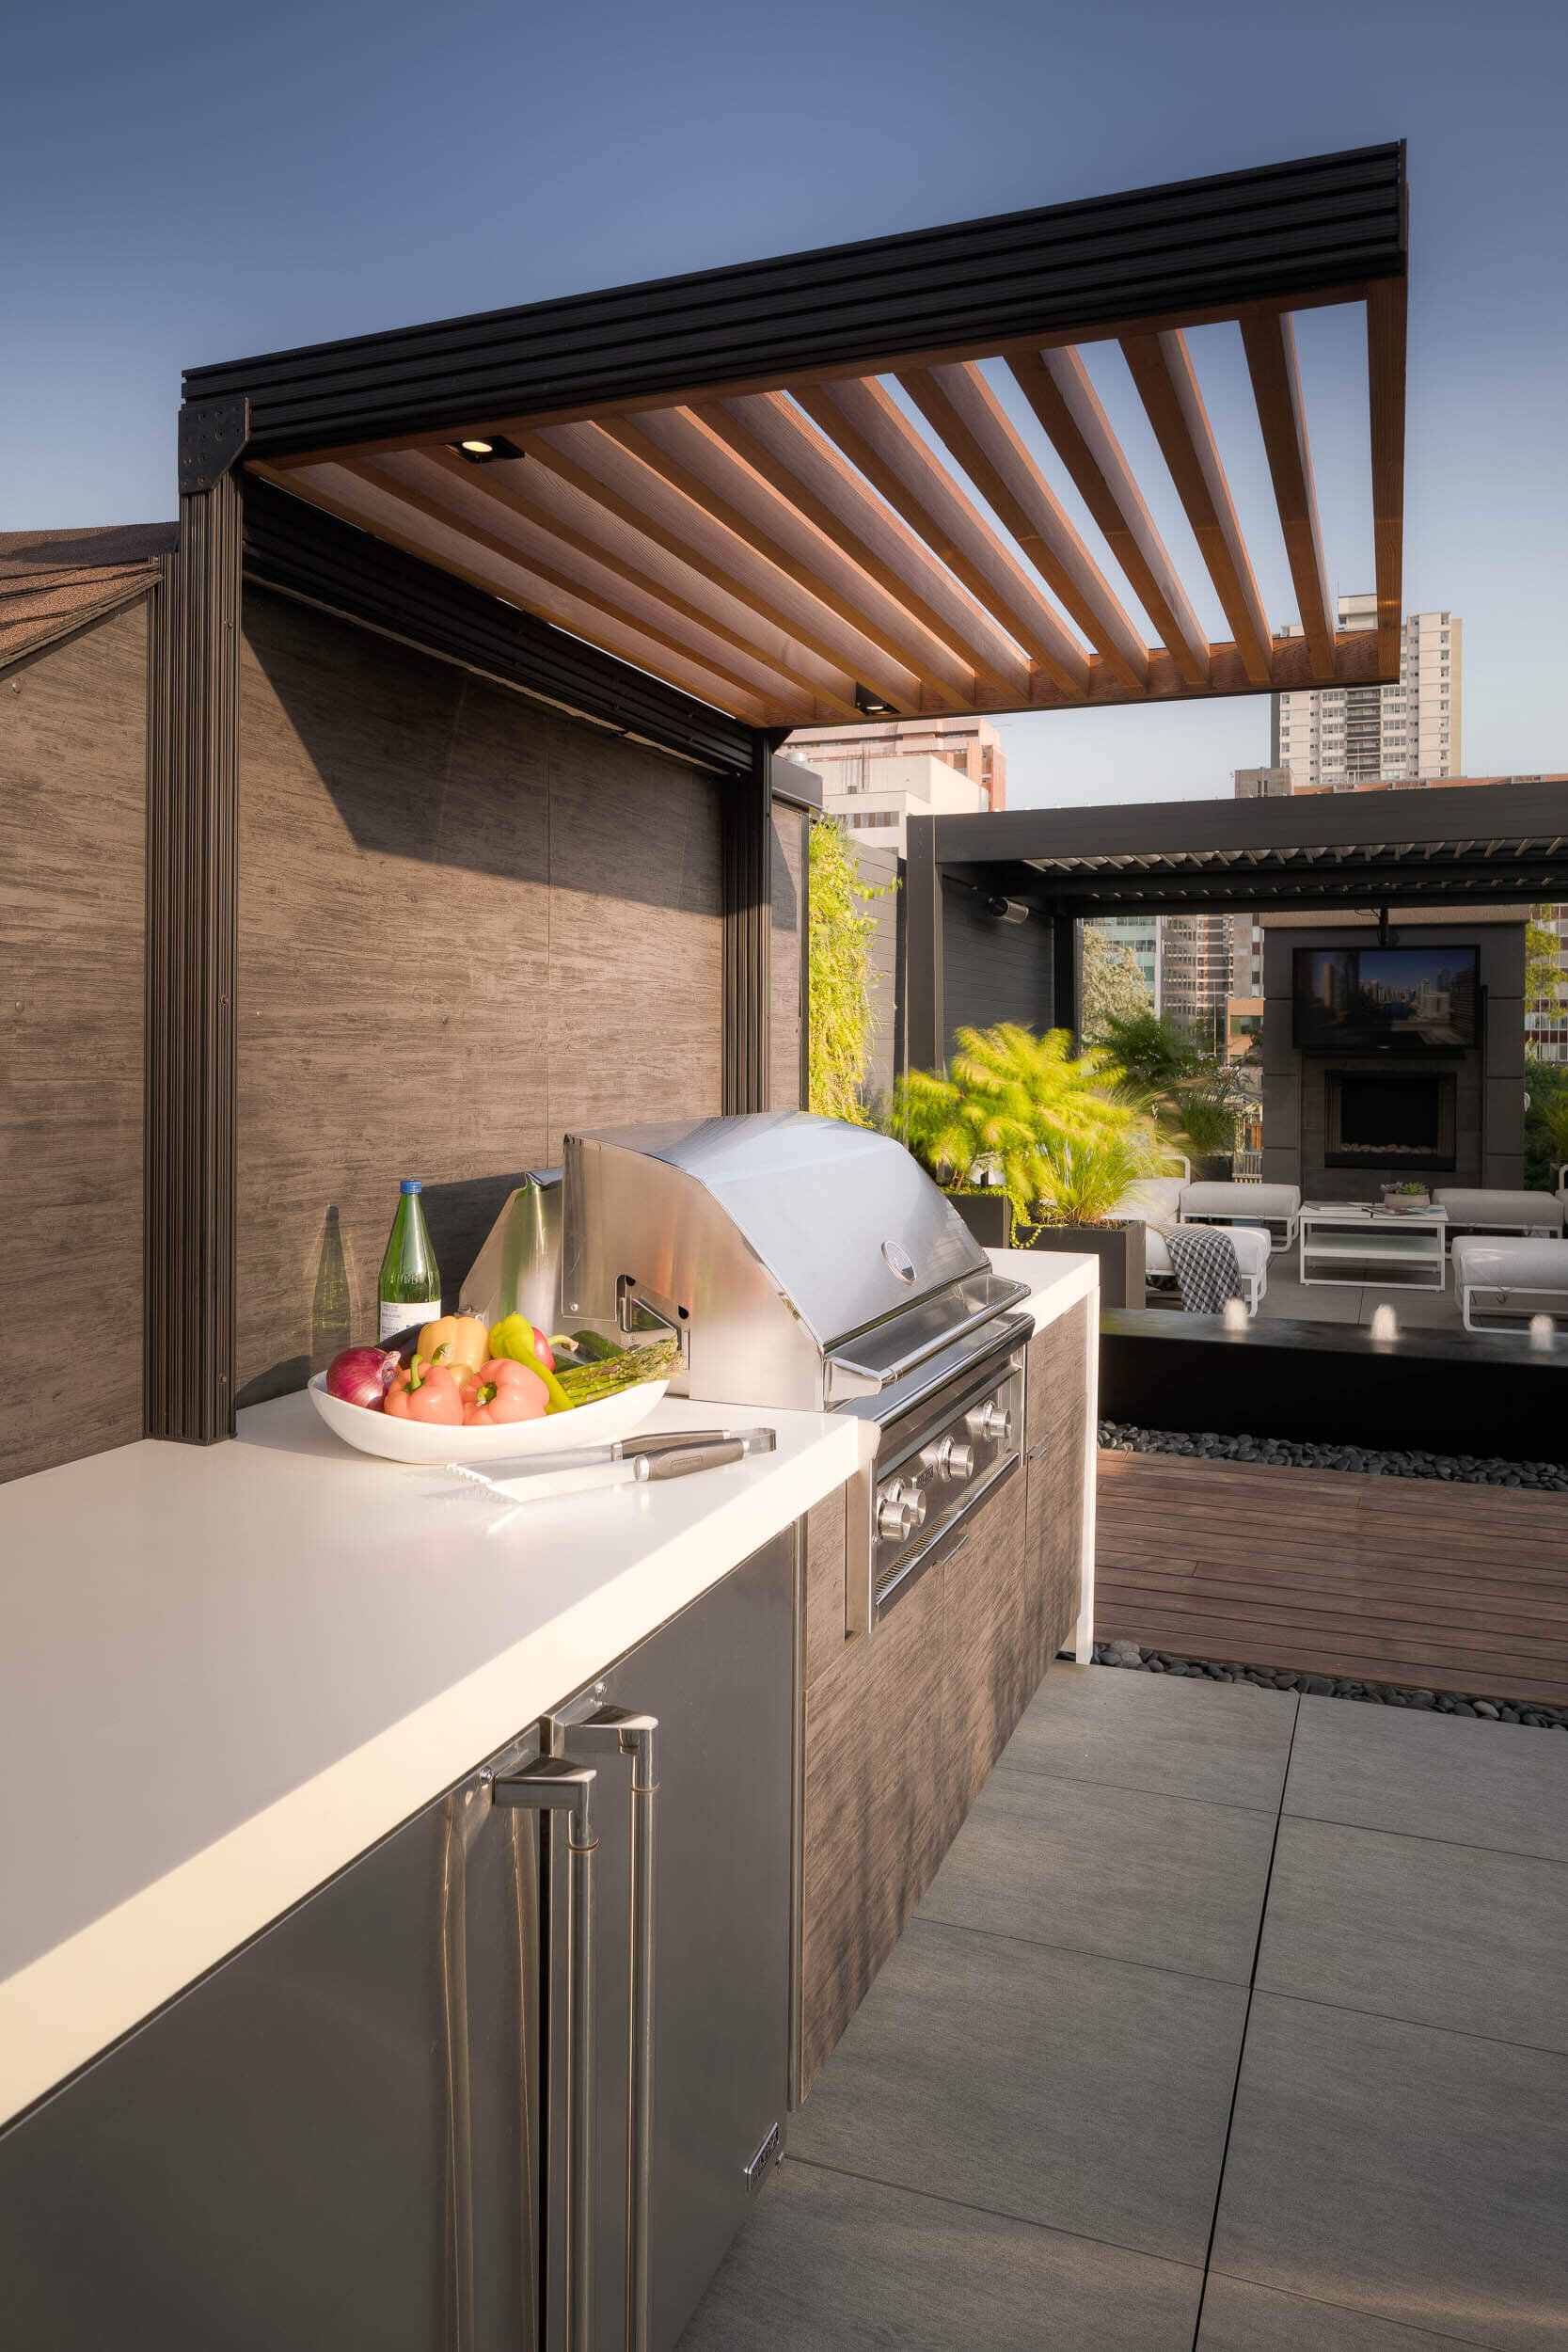 garden-living-outdoor-kitchens-rooftop-terrace-pergola-lynx-grill.jpg